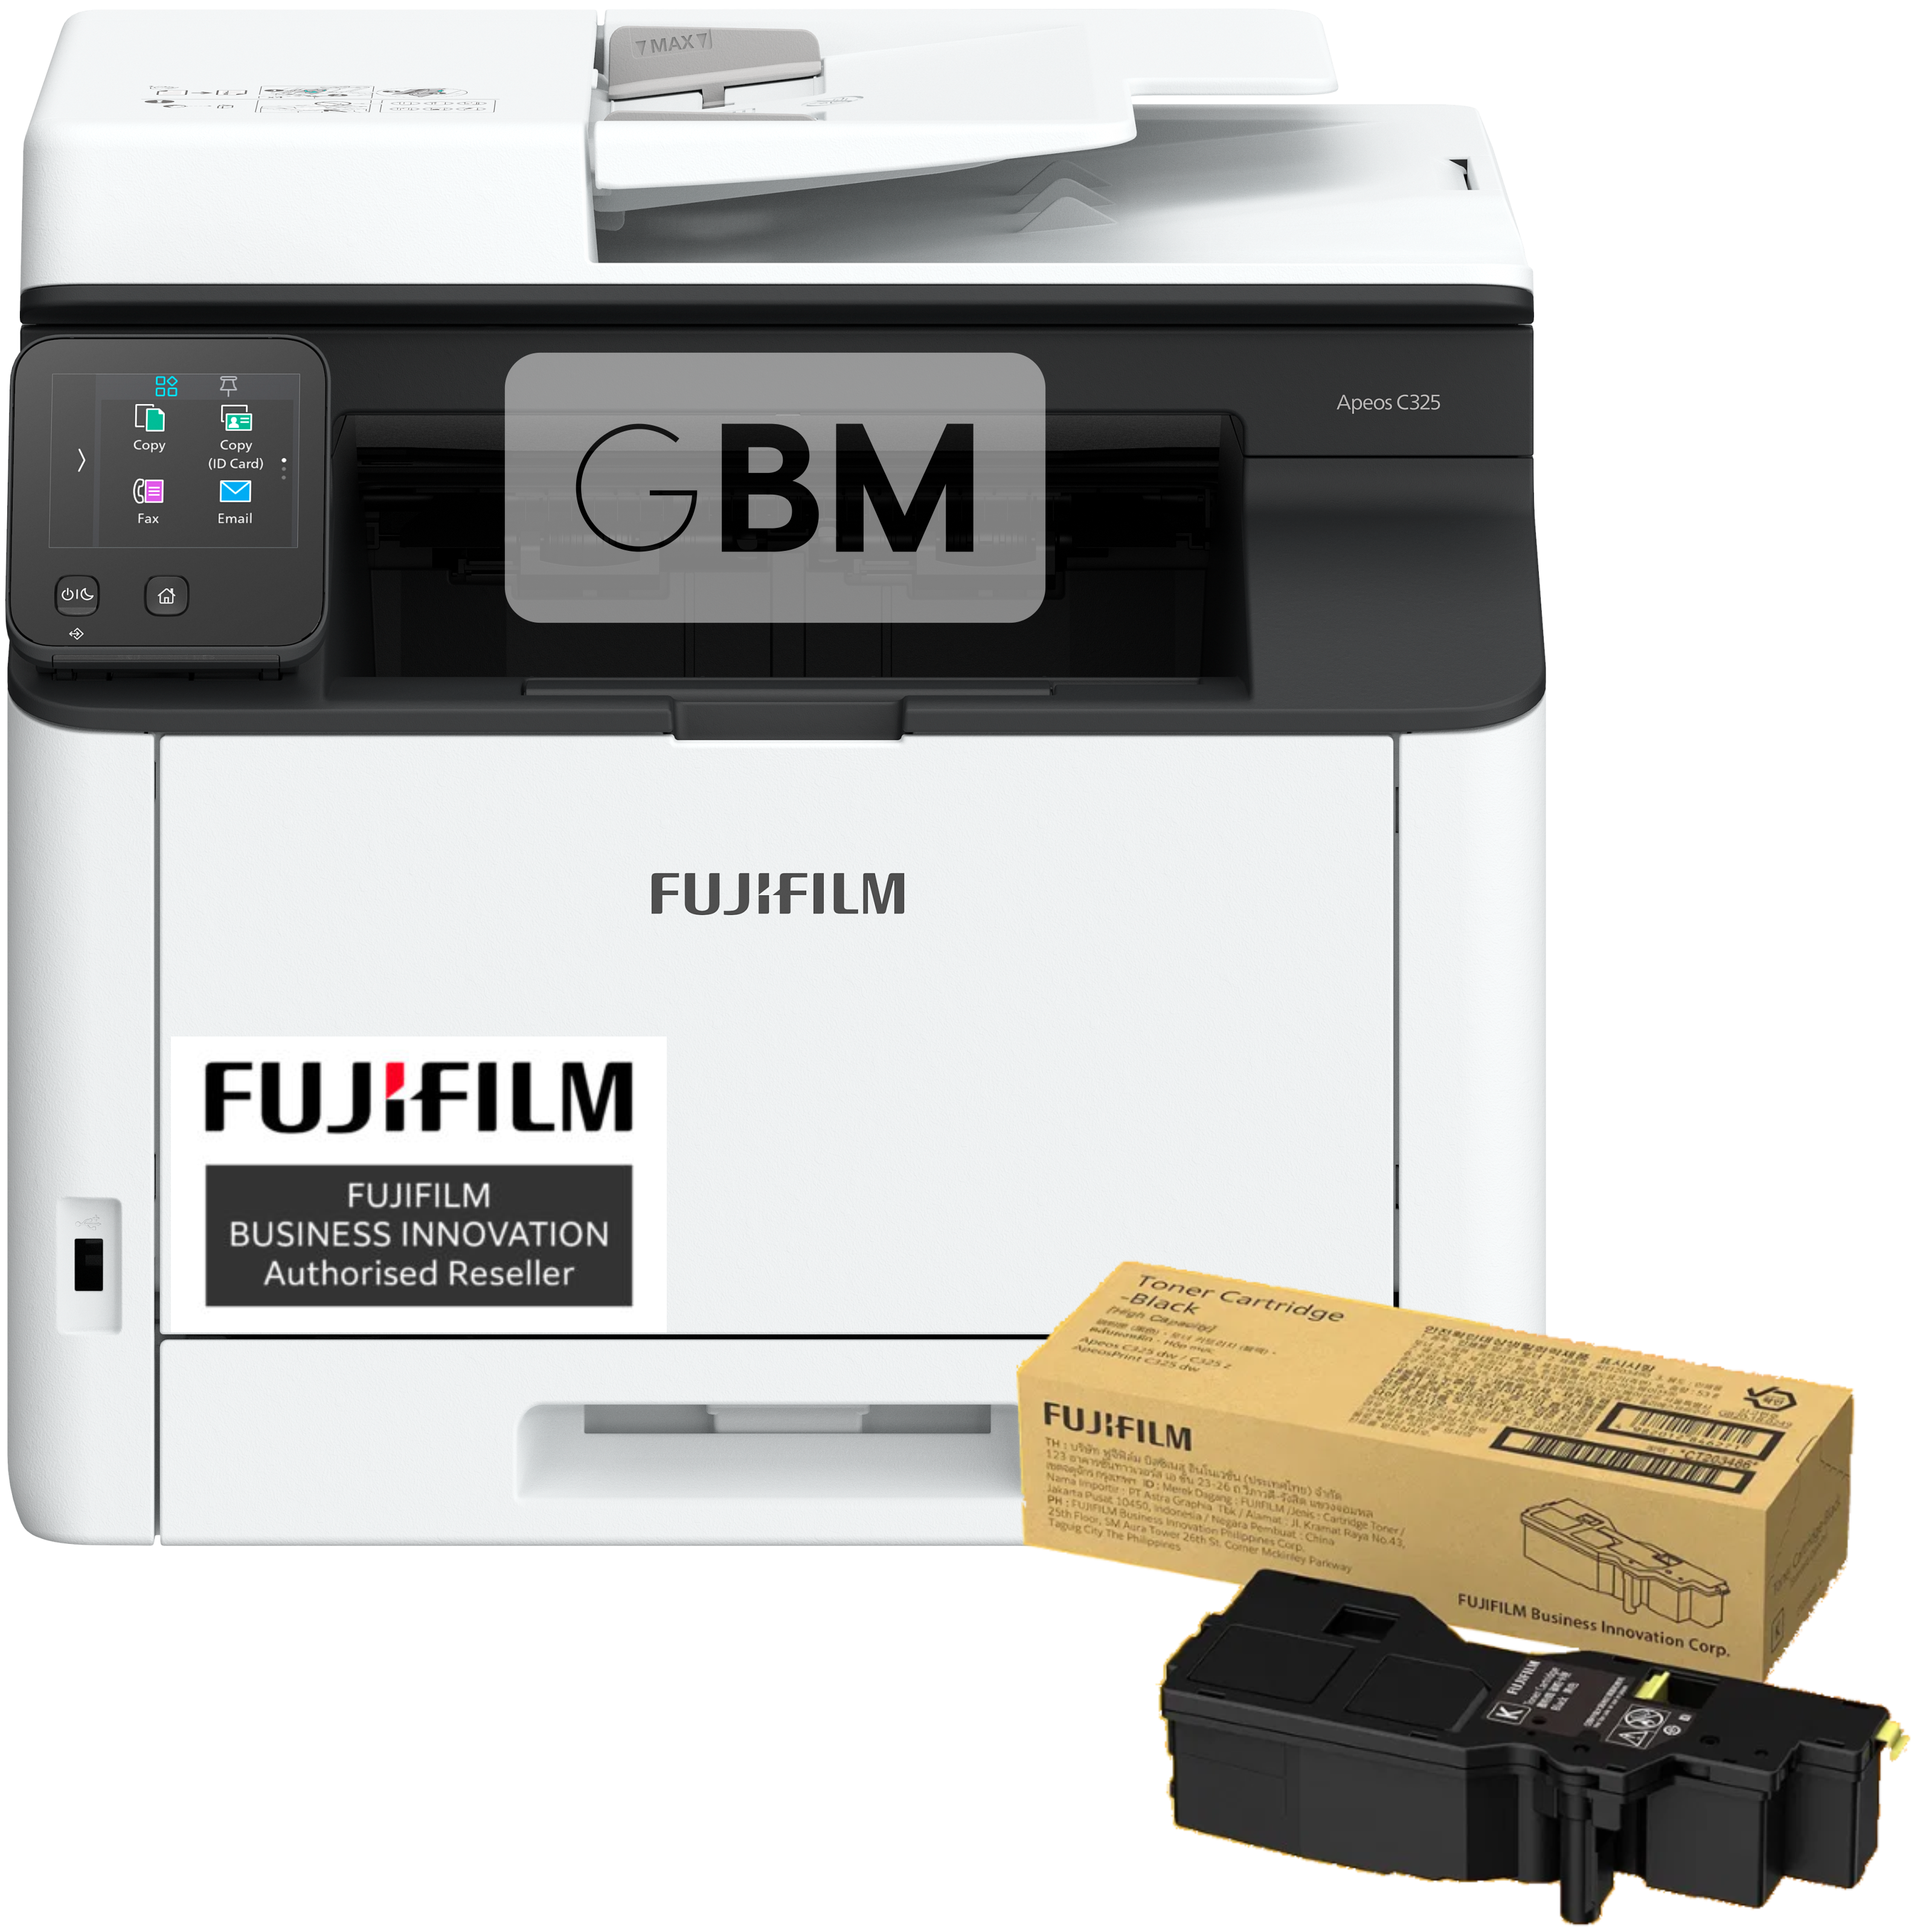 FUJIFILM Apeos C325dw A4 Colour Multifunction Printer + Extra Set of Toners & 3Y Warranty